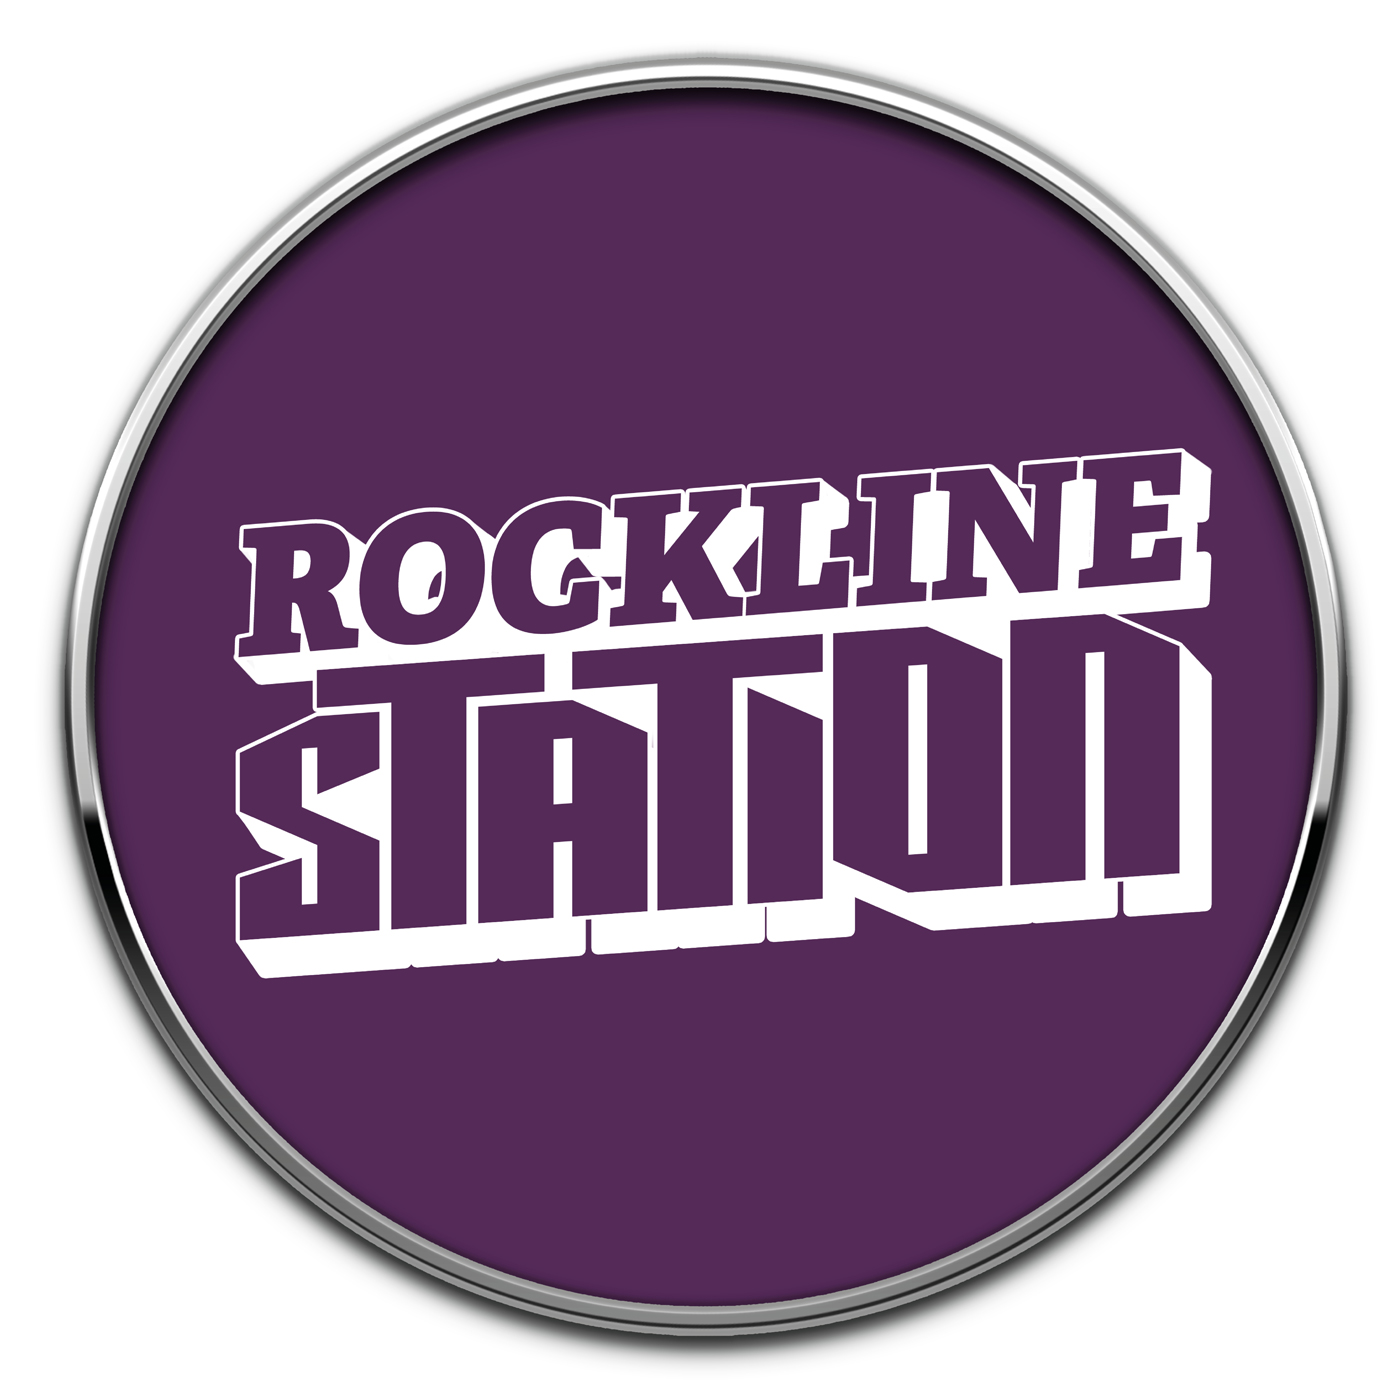 Rockline Station